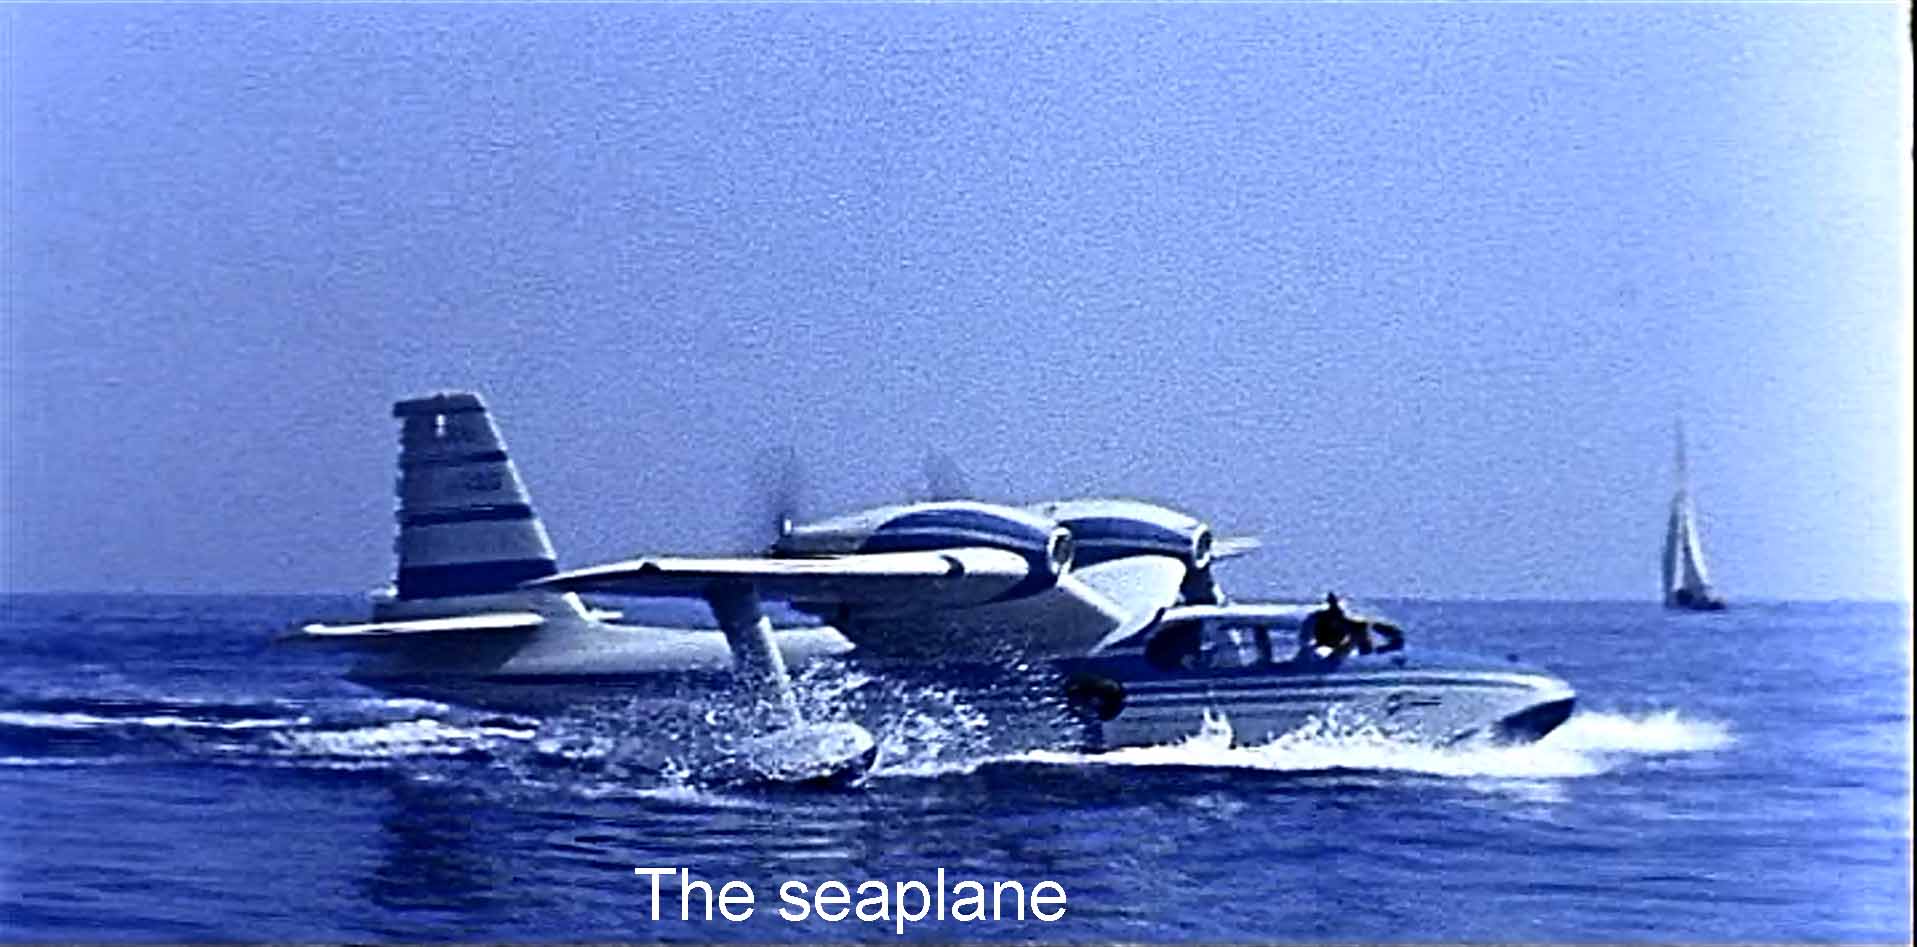 The seaplane